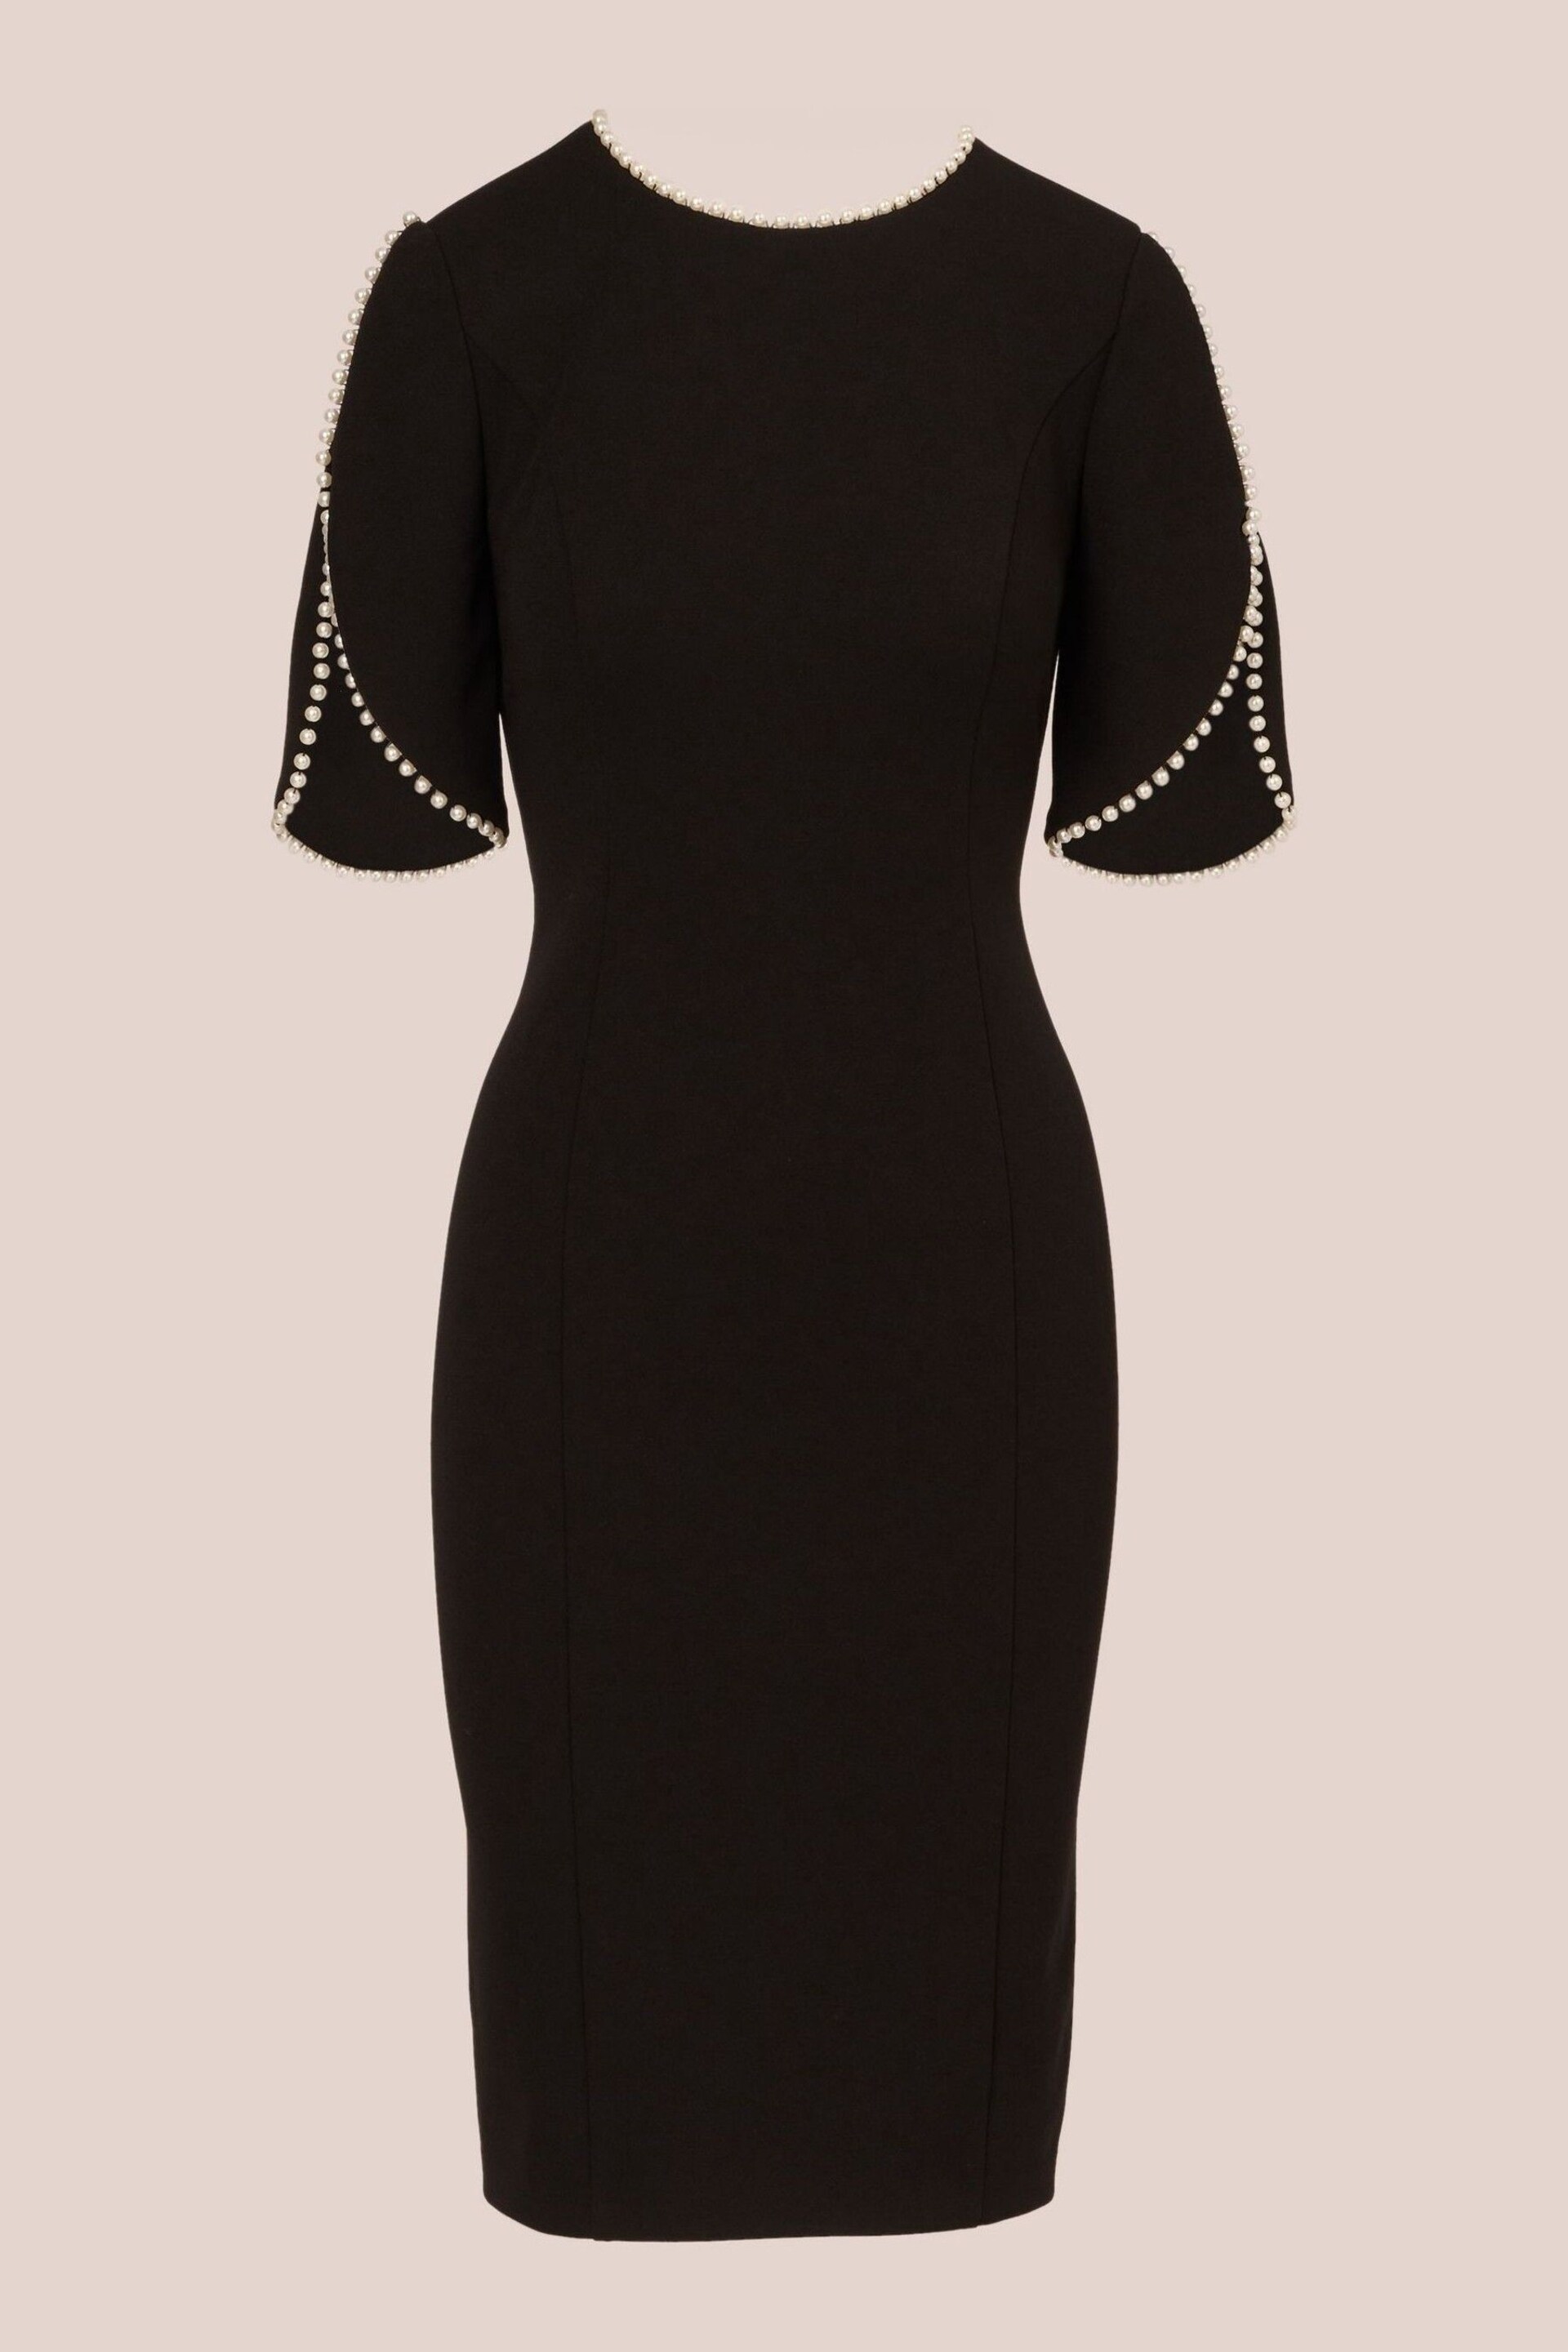 Adrianna Papell Knit Crepe Pearl Midi Black Dress - Image 6 of 7